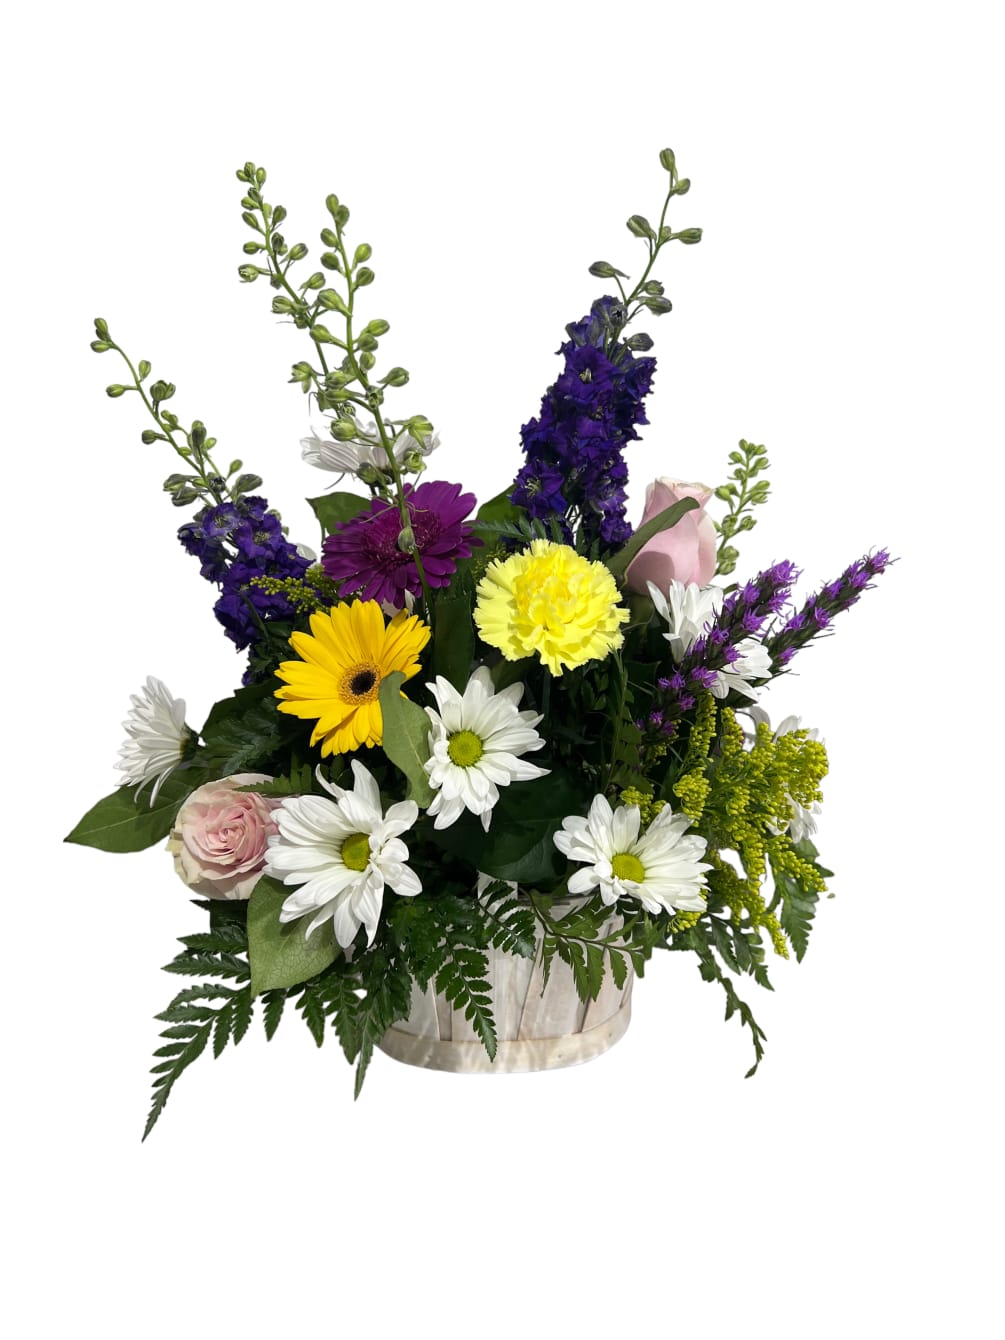 Fresh assortment of blooms arranged in a basket, using larkspur, gerbera daisies